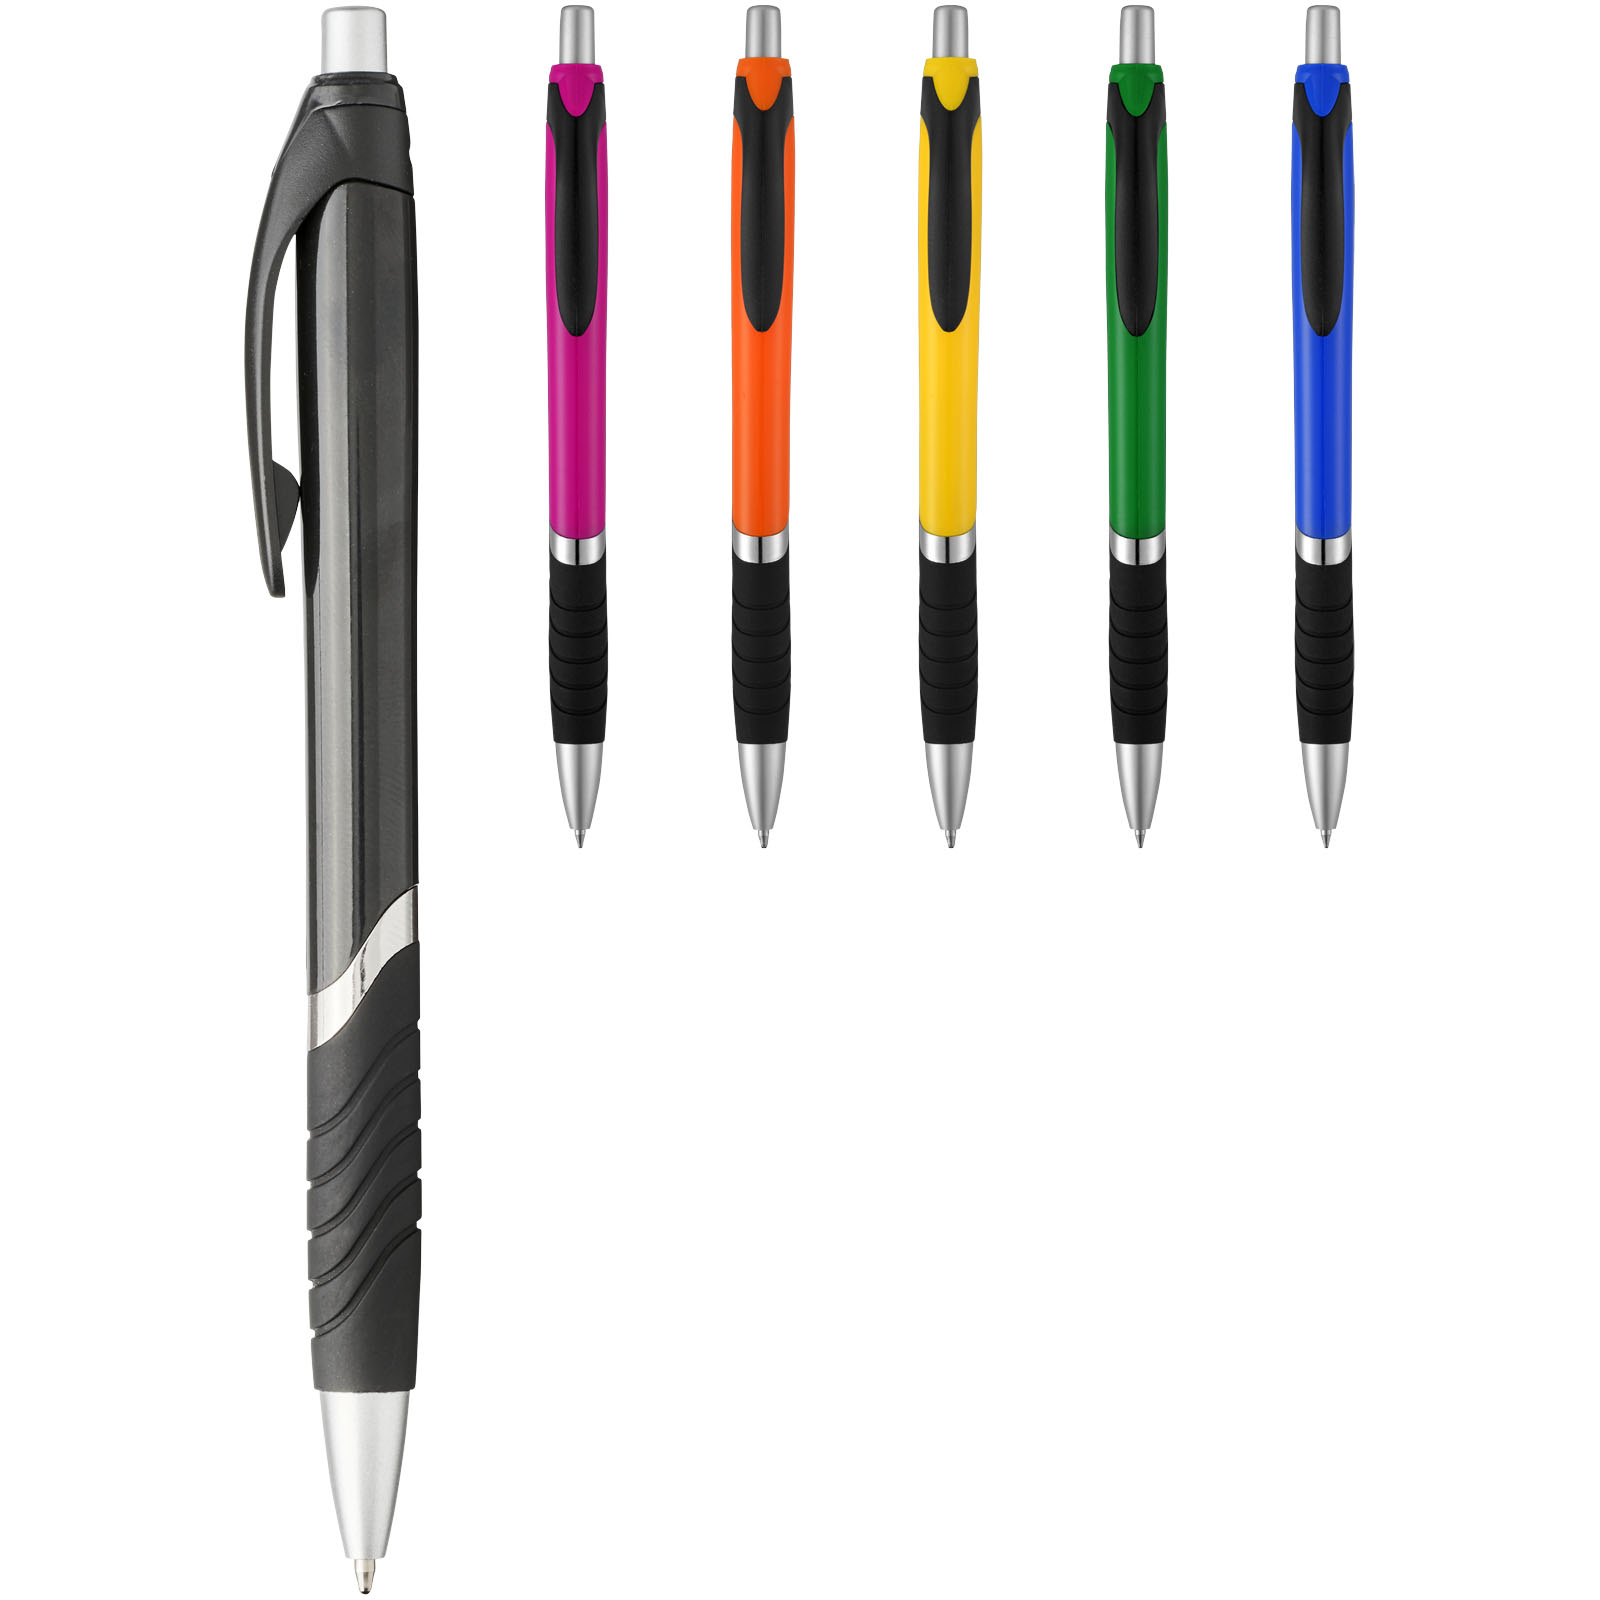 Ballpoint Pens - Turbo ballpoint pen with rubber grip